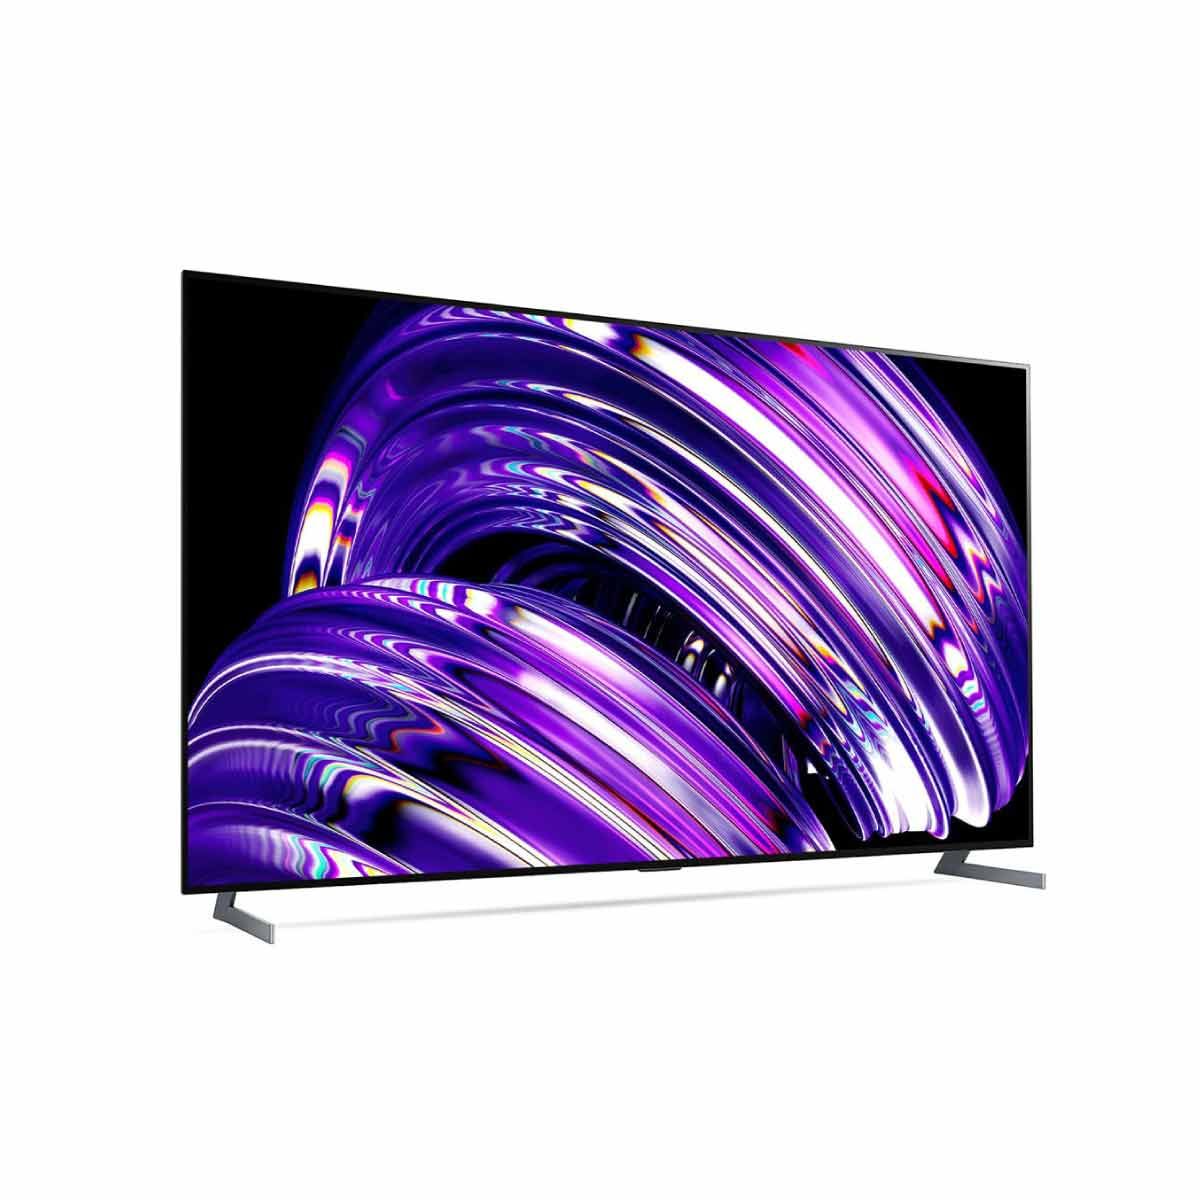 LG OLED  8K Smart TV 120Hz รุ่น OLED77Z2PSA  สมาร์ททีวี 77 นิ้ว Dolby Vision Atmos  120Hz